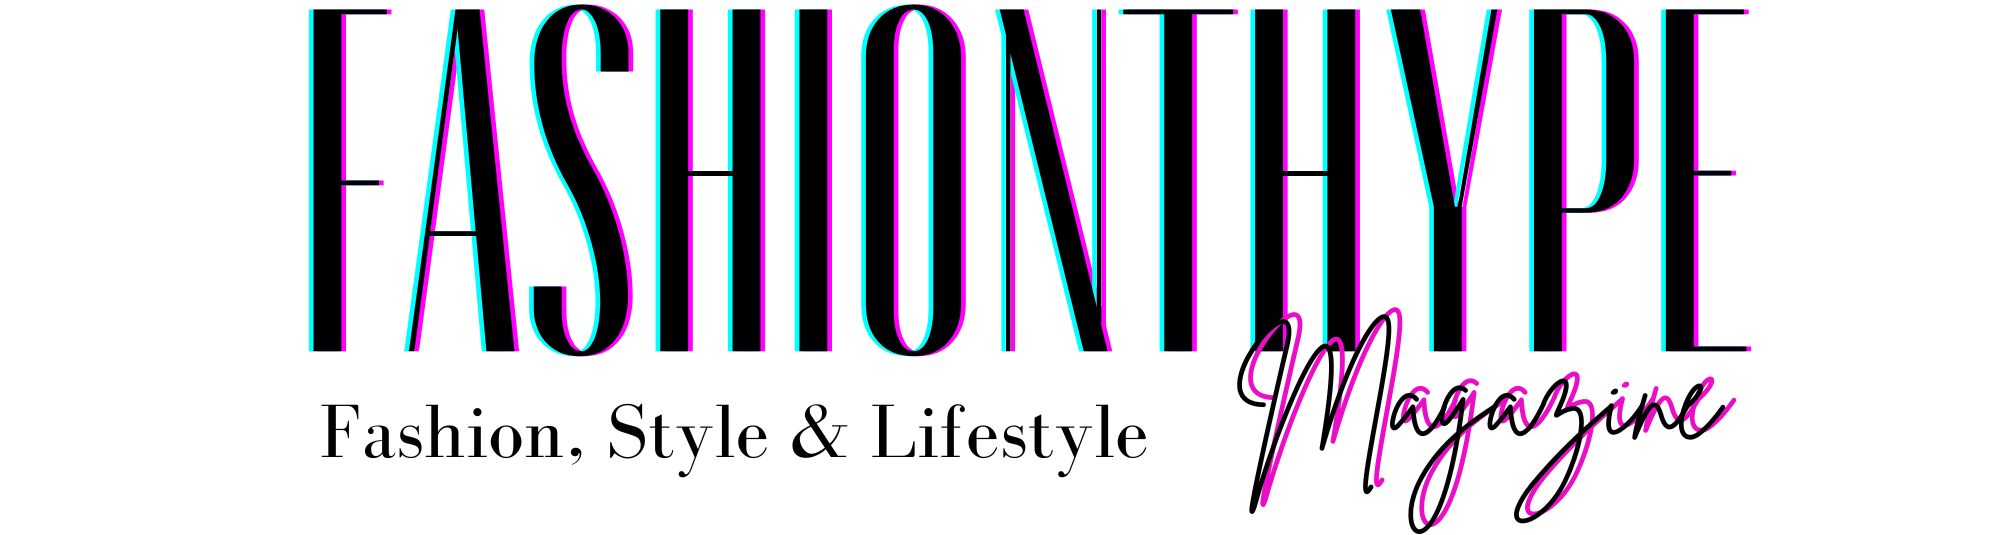 Banner fashionthype magazine home